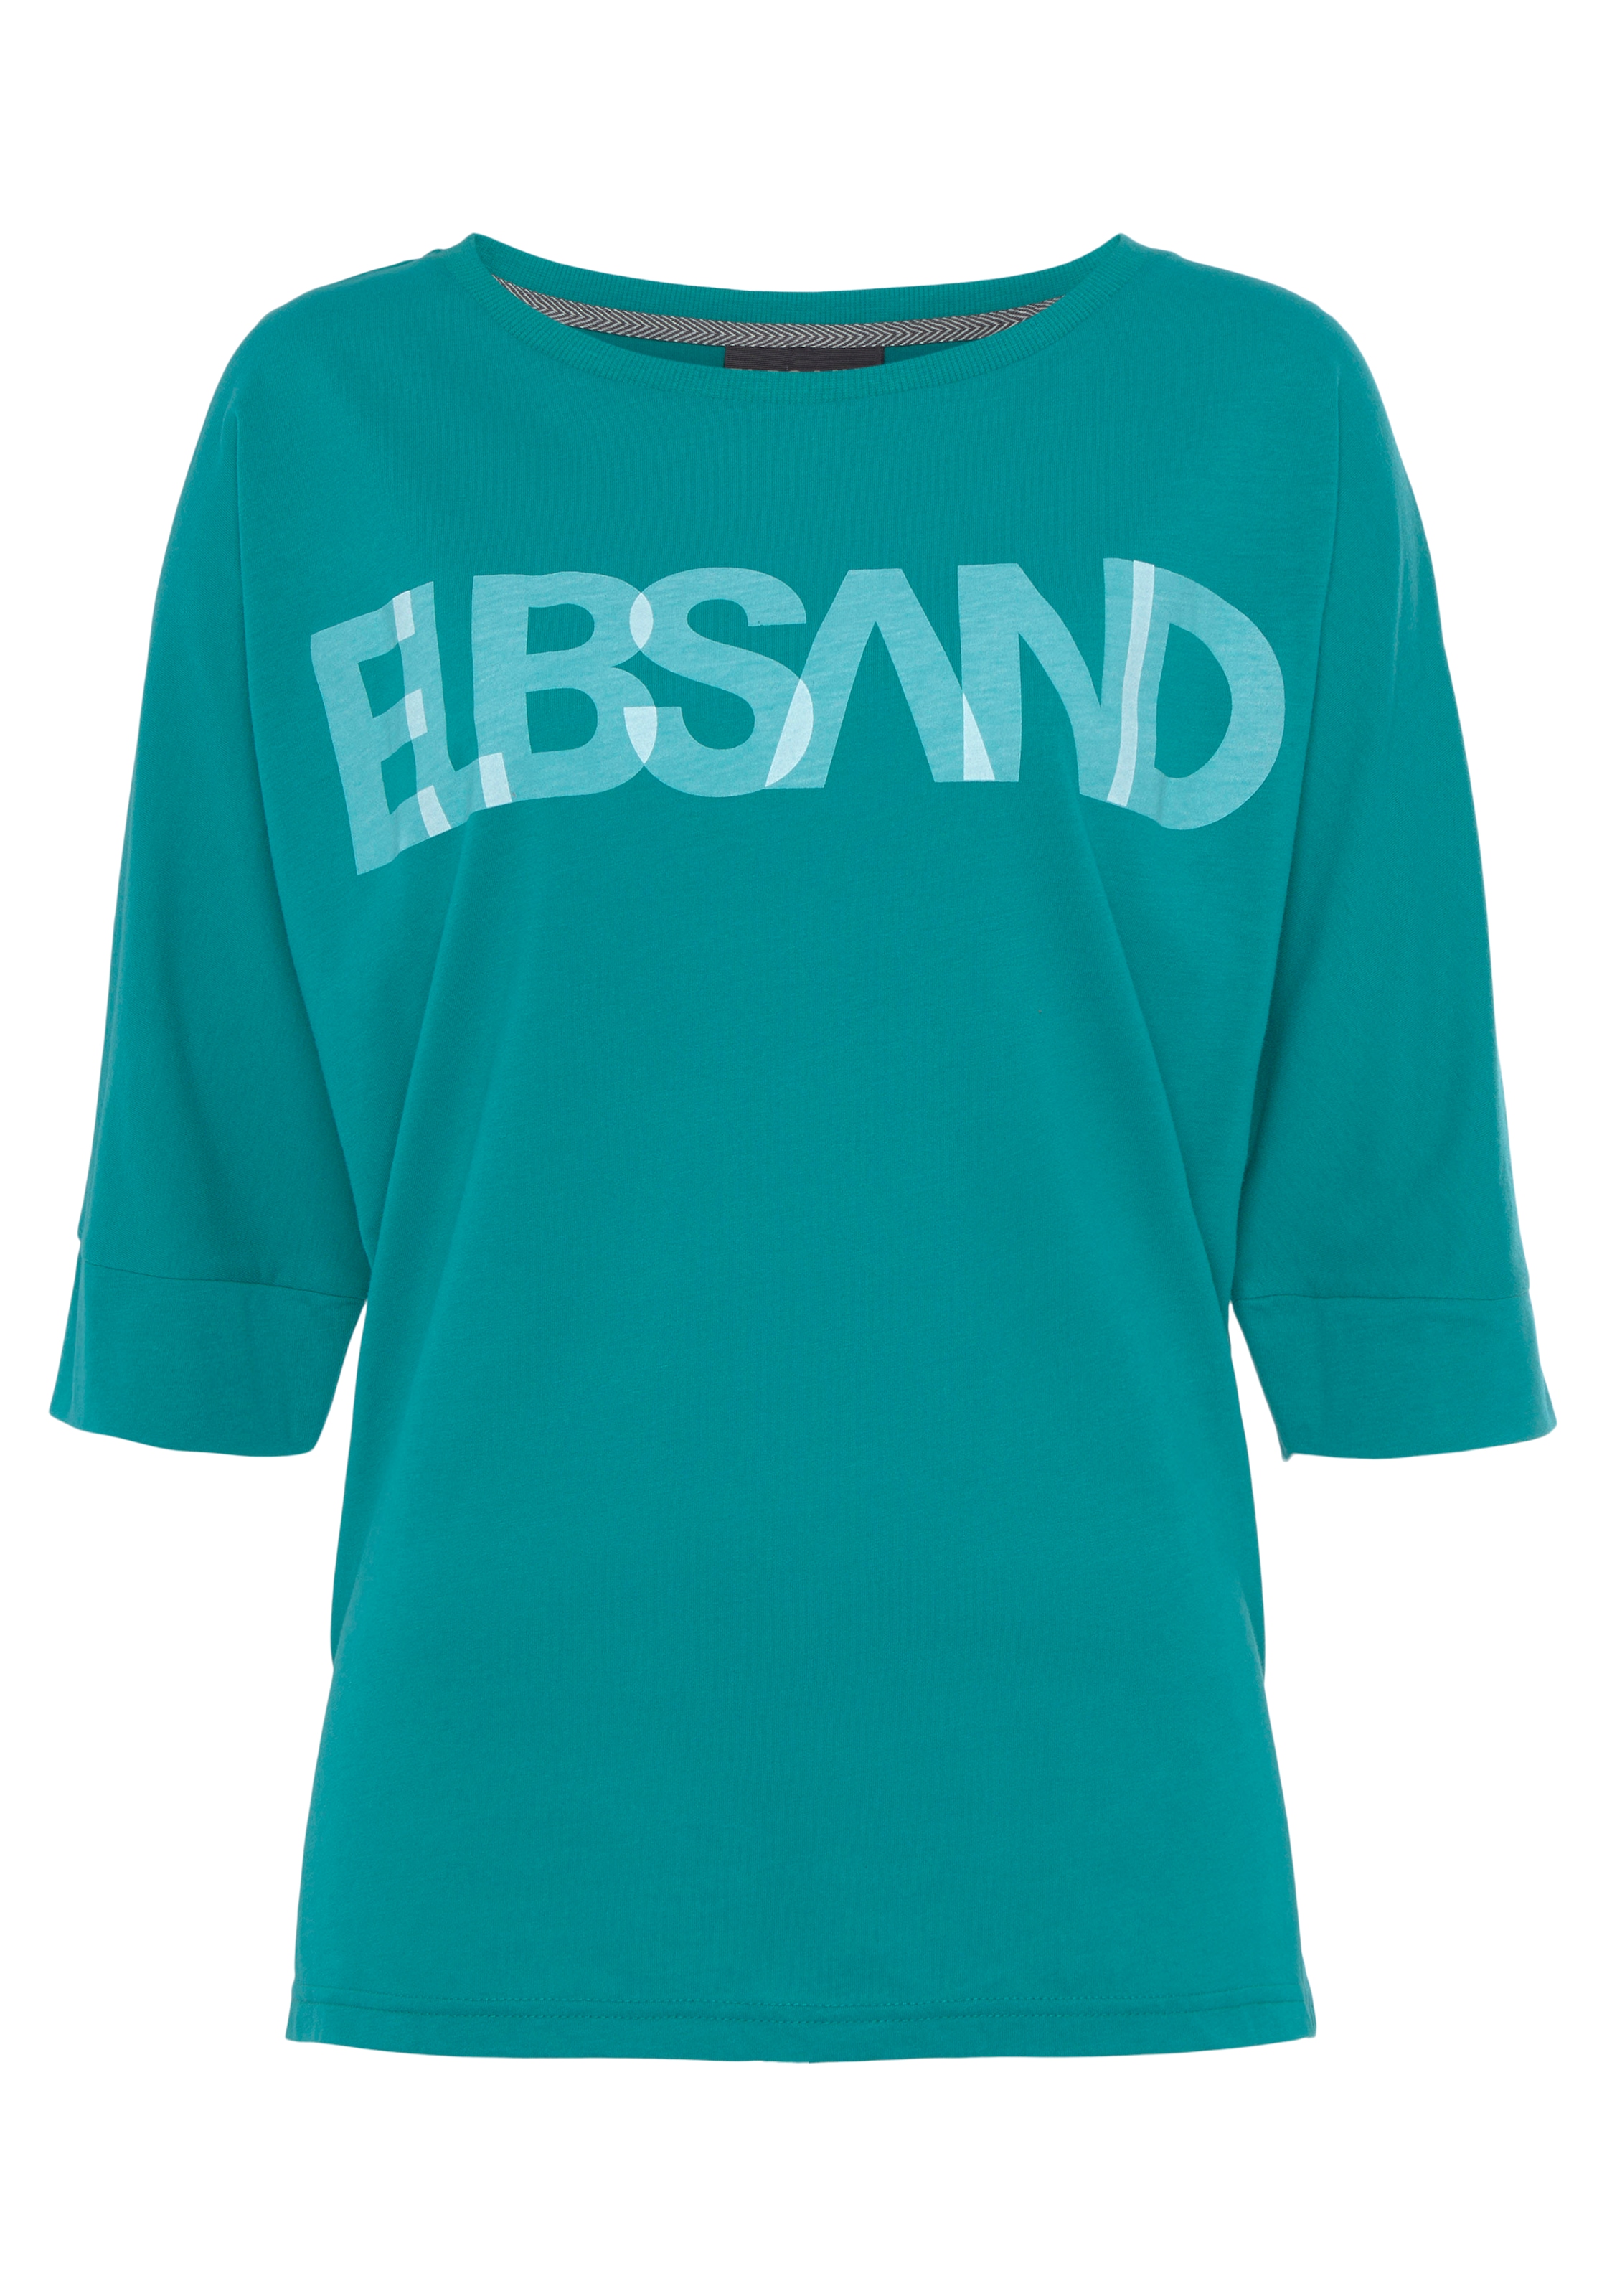 Elbsand 3/4-Arm-Shirt, mit lockere Baumwoll-Mix, Logodruck, shoppen Passform